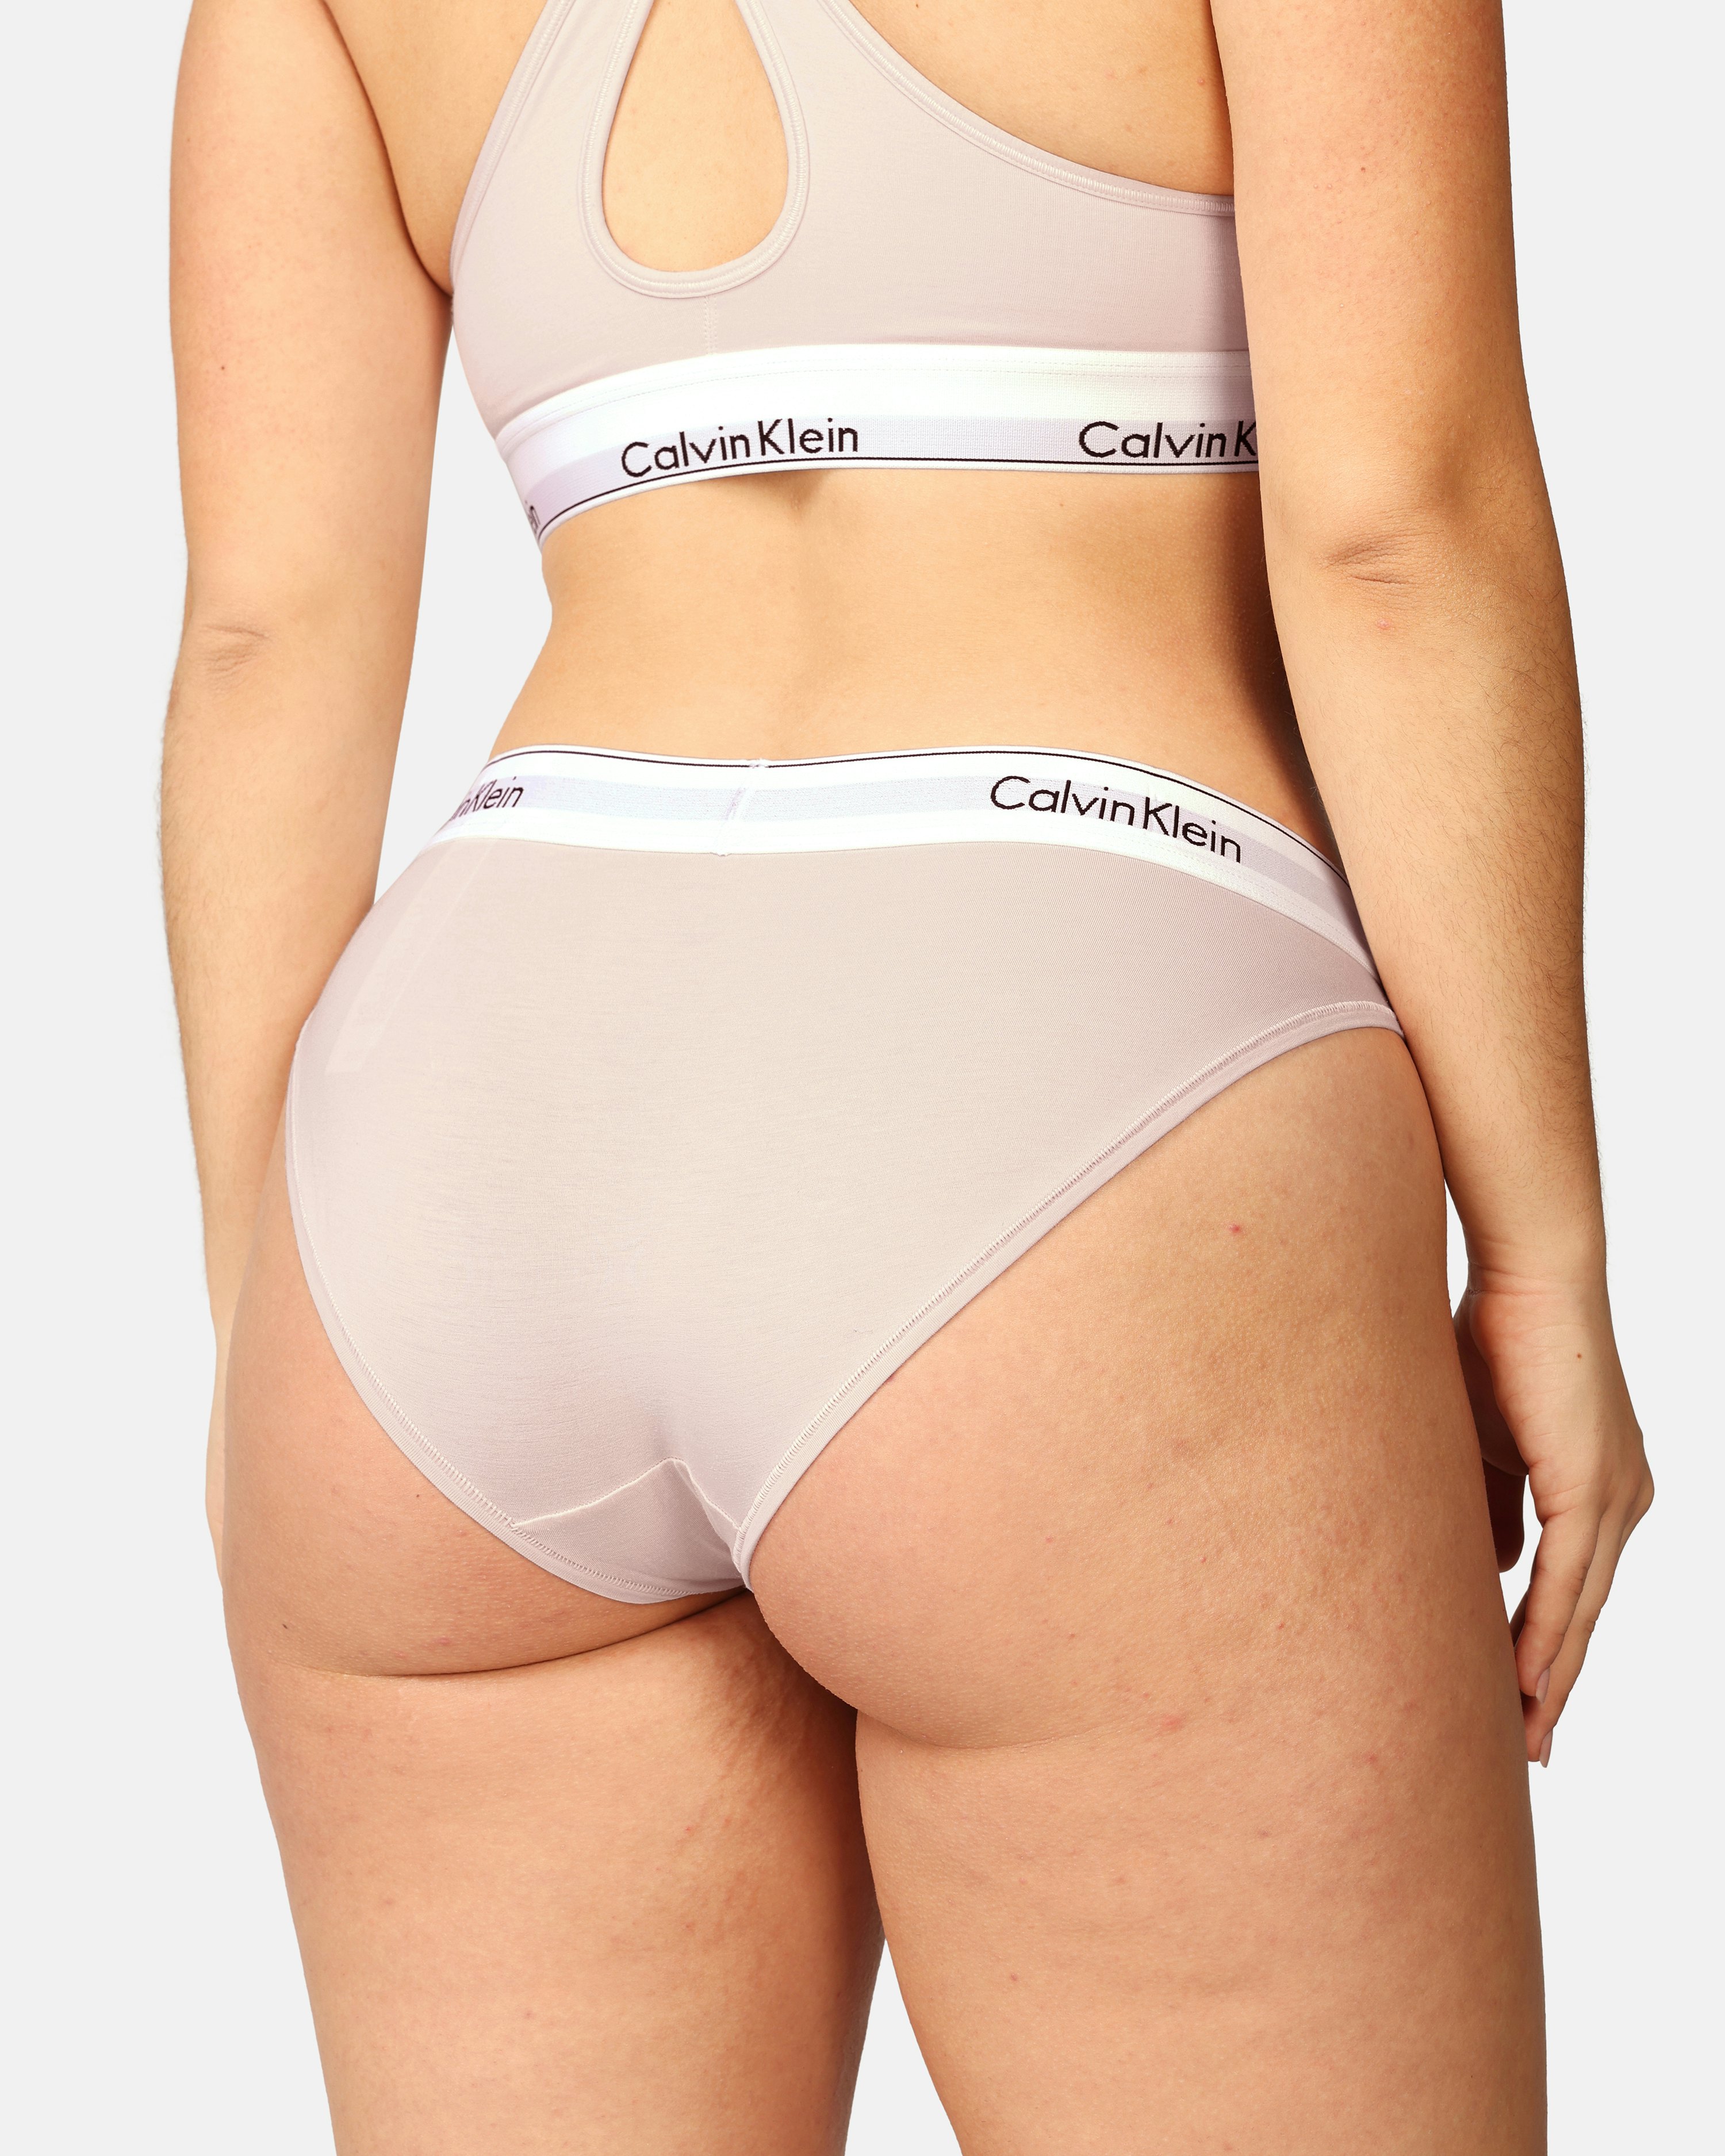 Authentic Goods Davao - Calvin Klein Underwear Php 750 only per